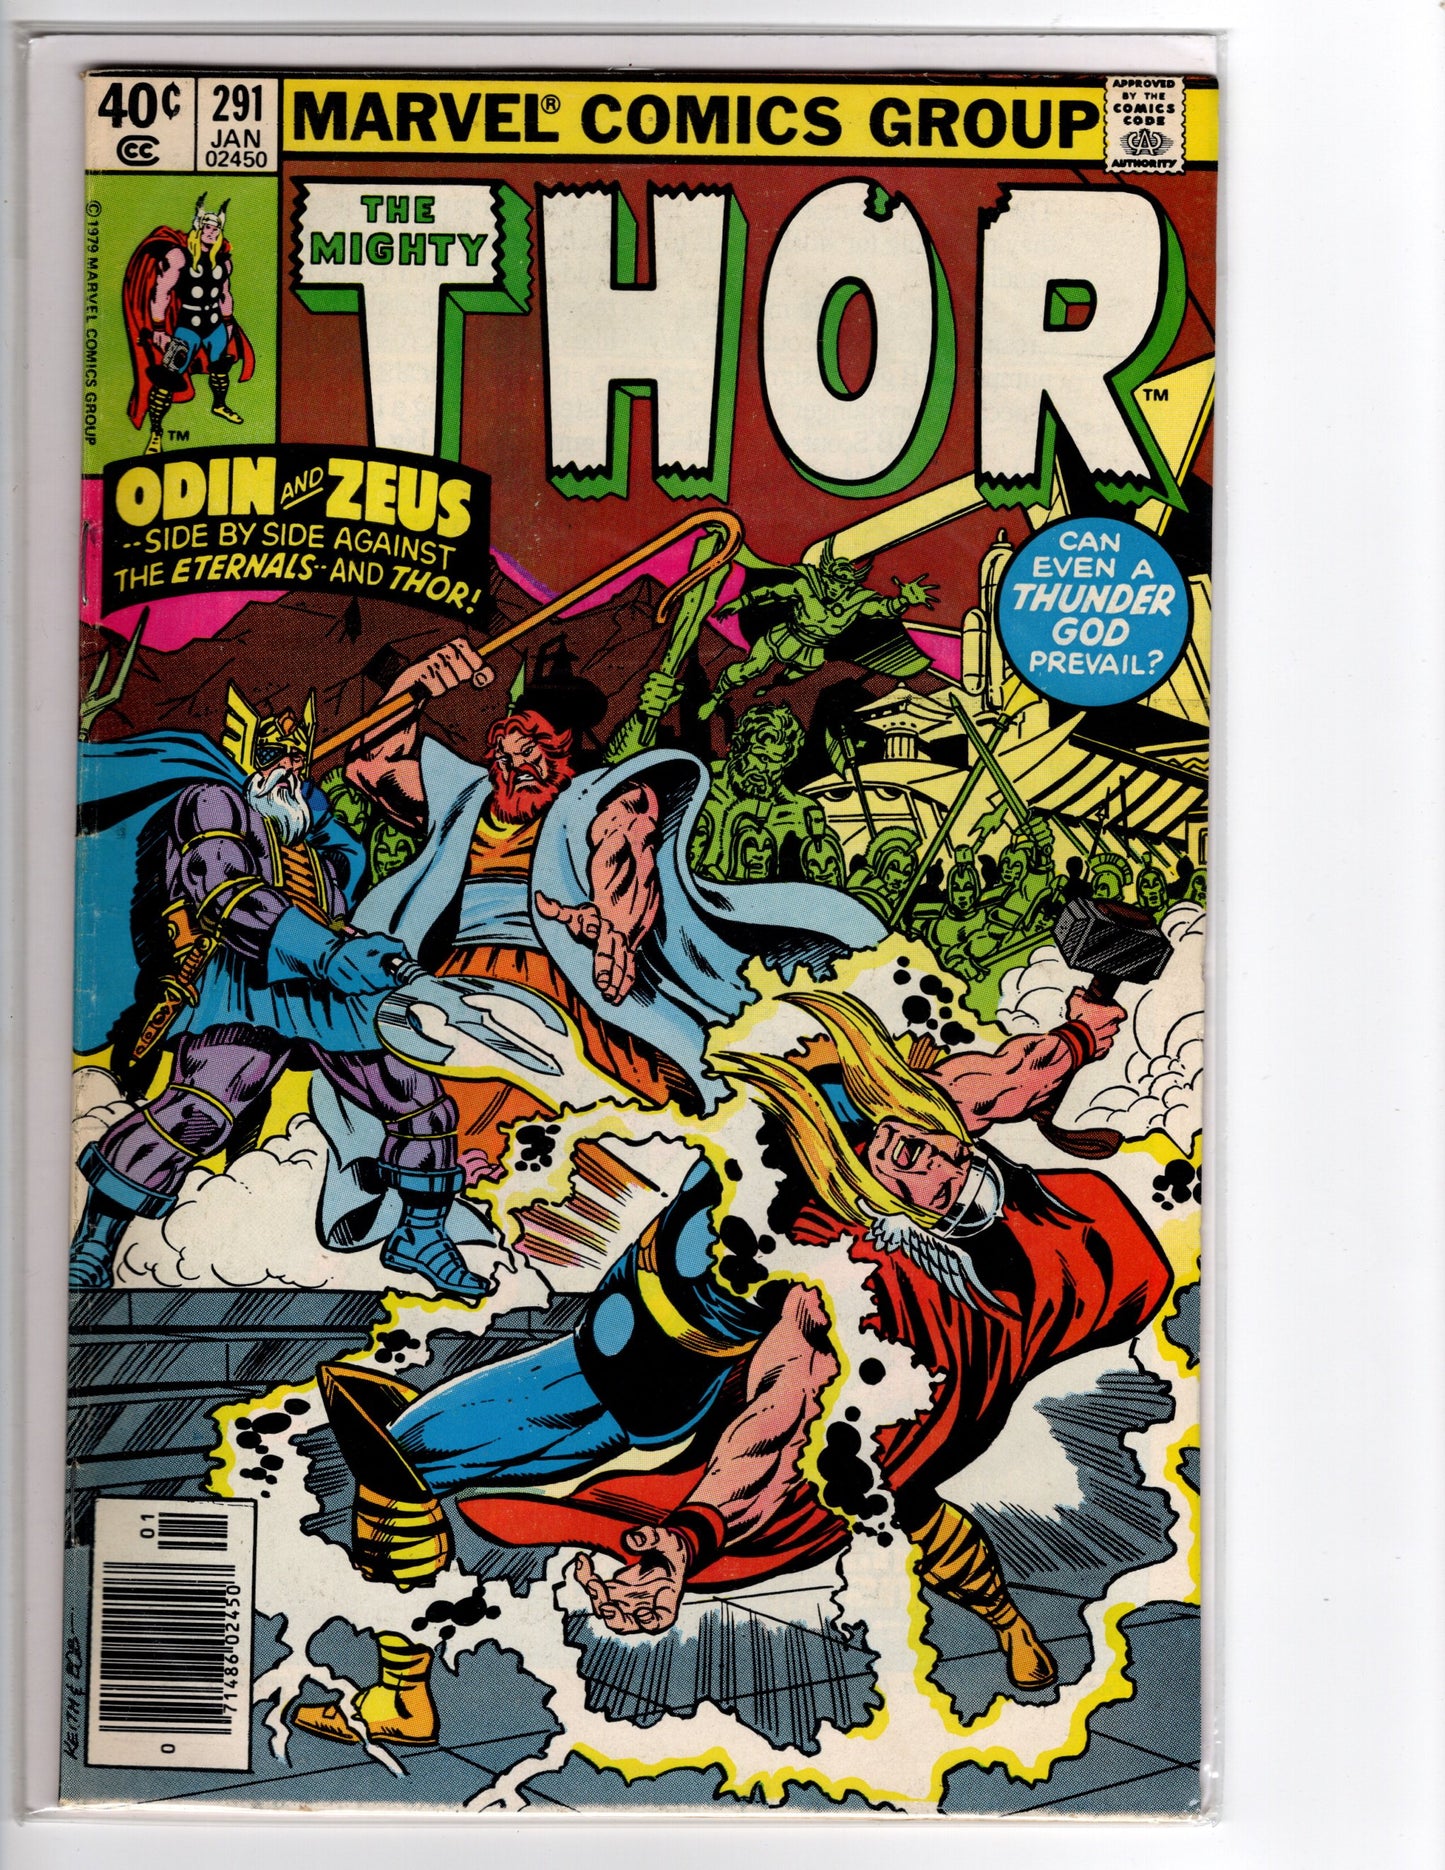 Thor #291